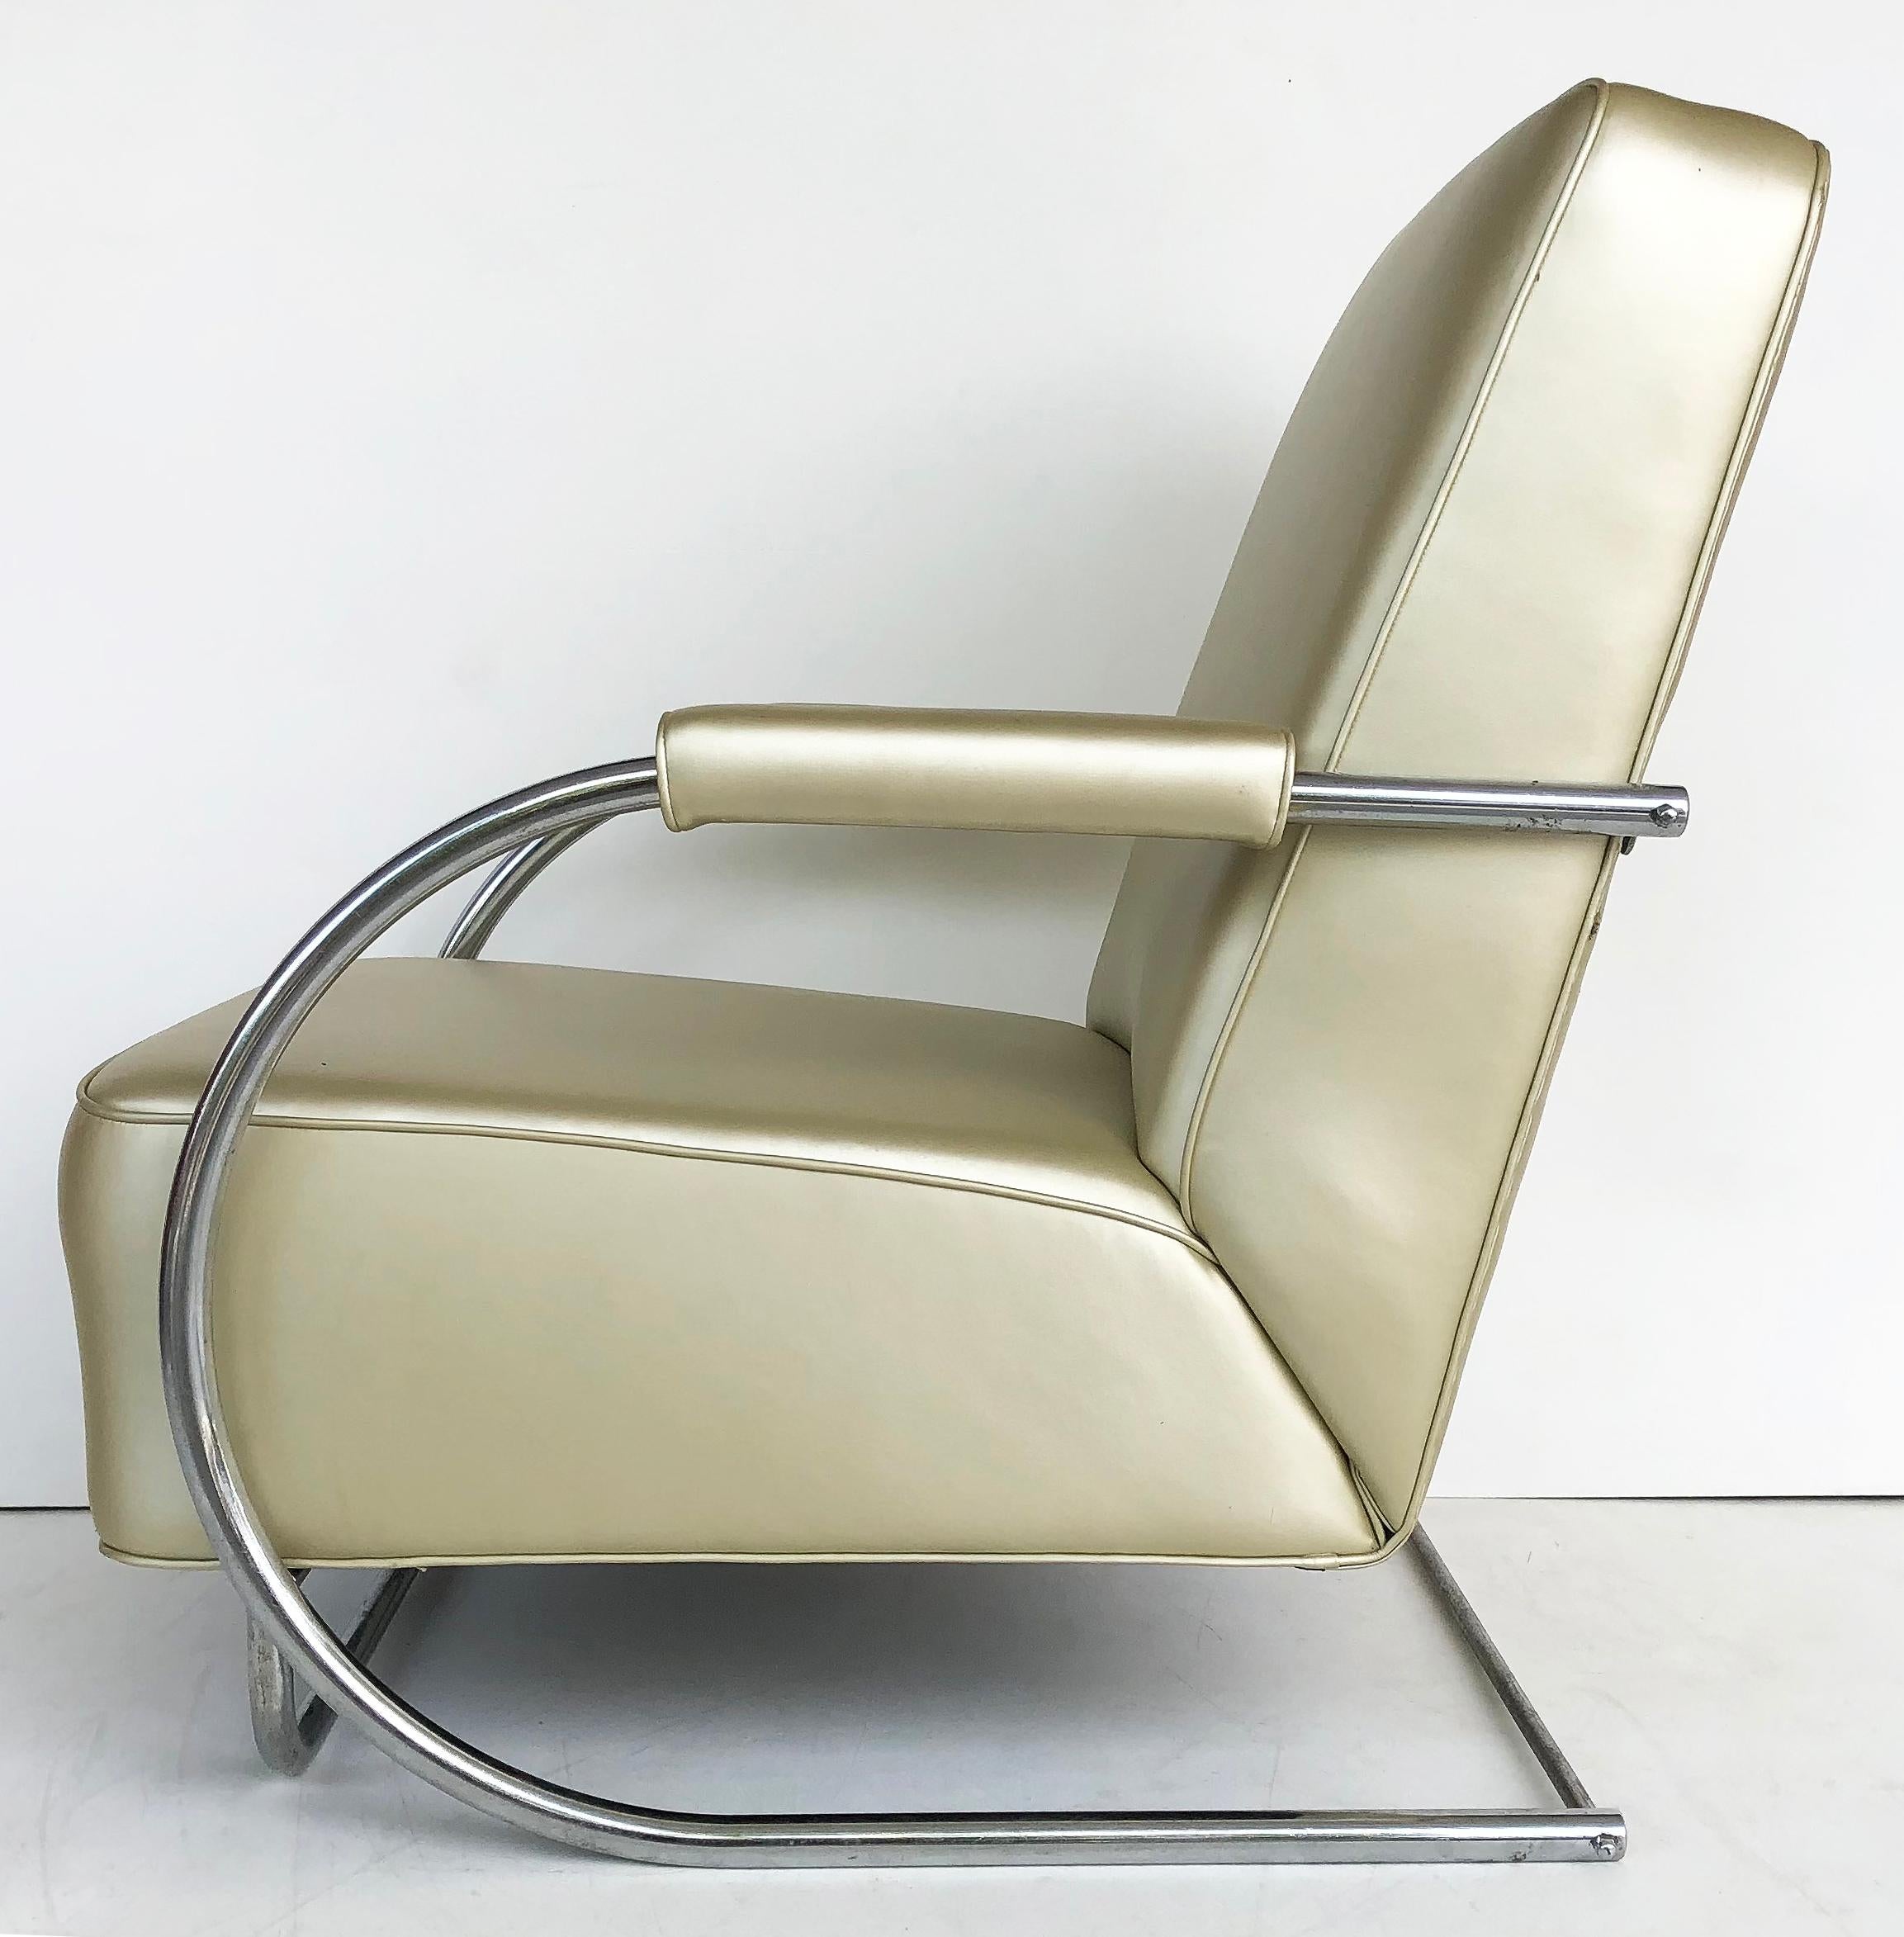 Chrome Art Deco Streamline Moderne Chairs by Kem Weber, Attributed 